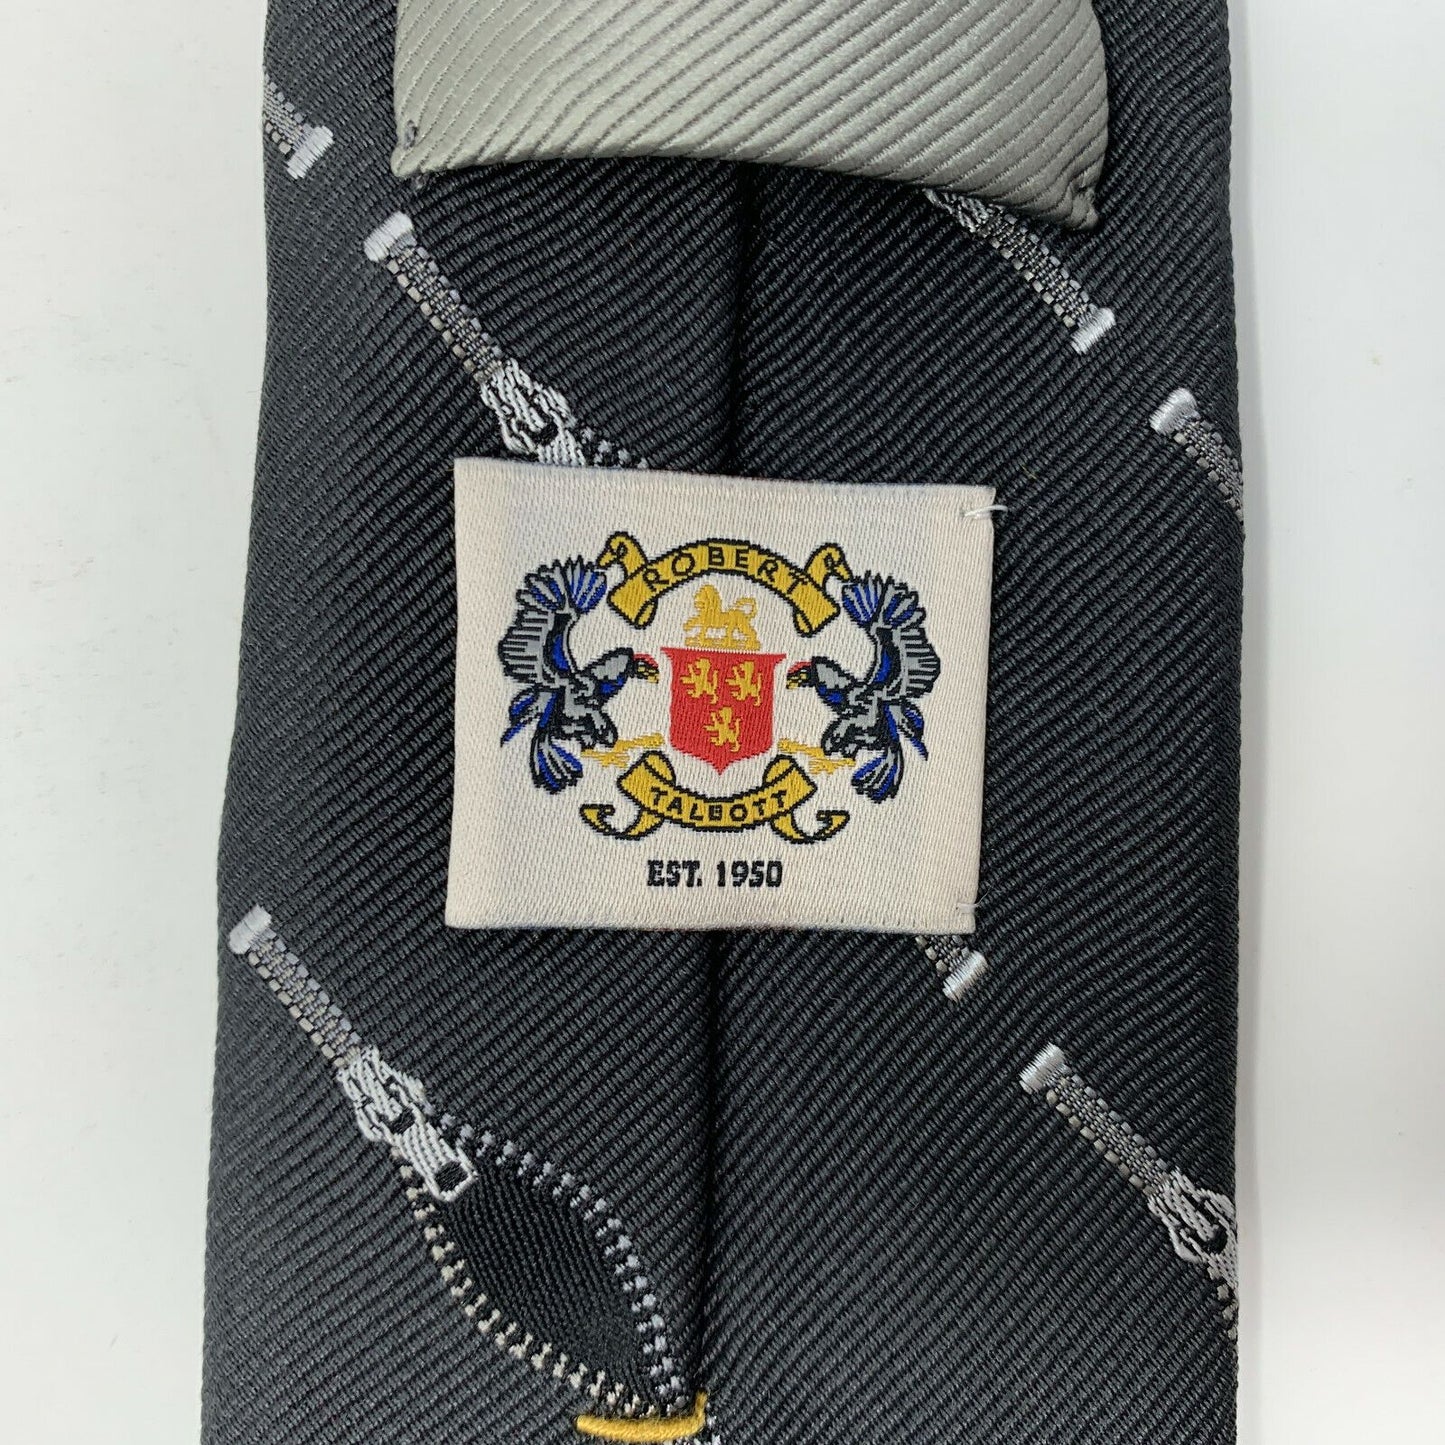 Robert Talbott Novelty Zipper Skinny Necktie Silk Black Charcoal Made in USA